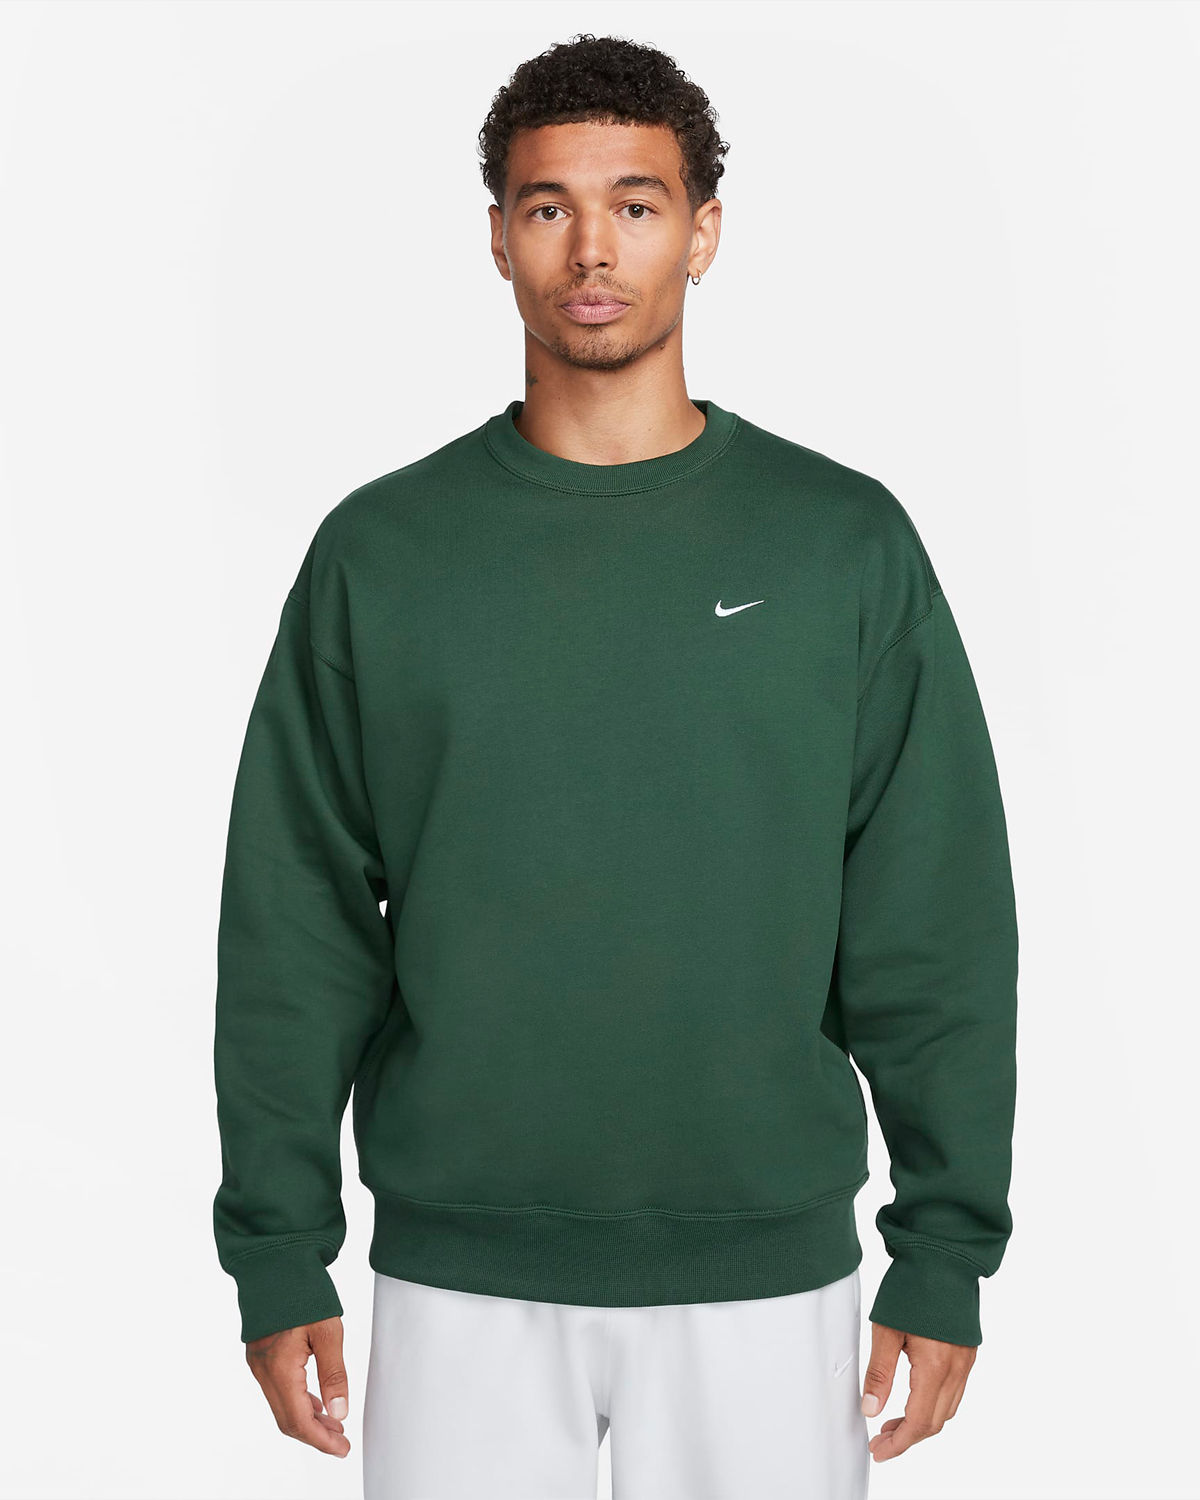 Nike Fir Green Shirts Shorts Clothing Sneaker Outfits